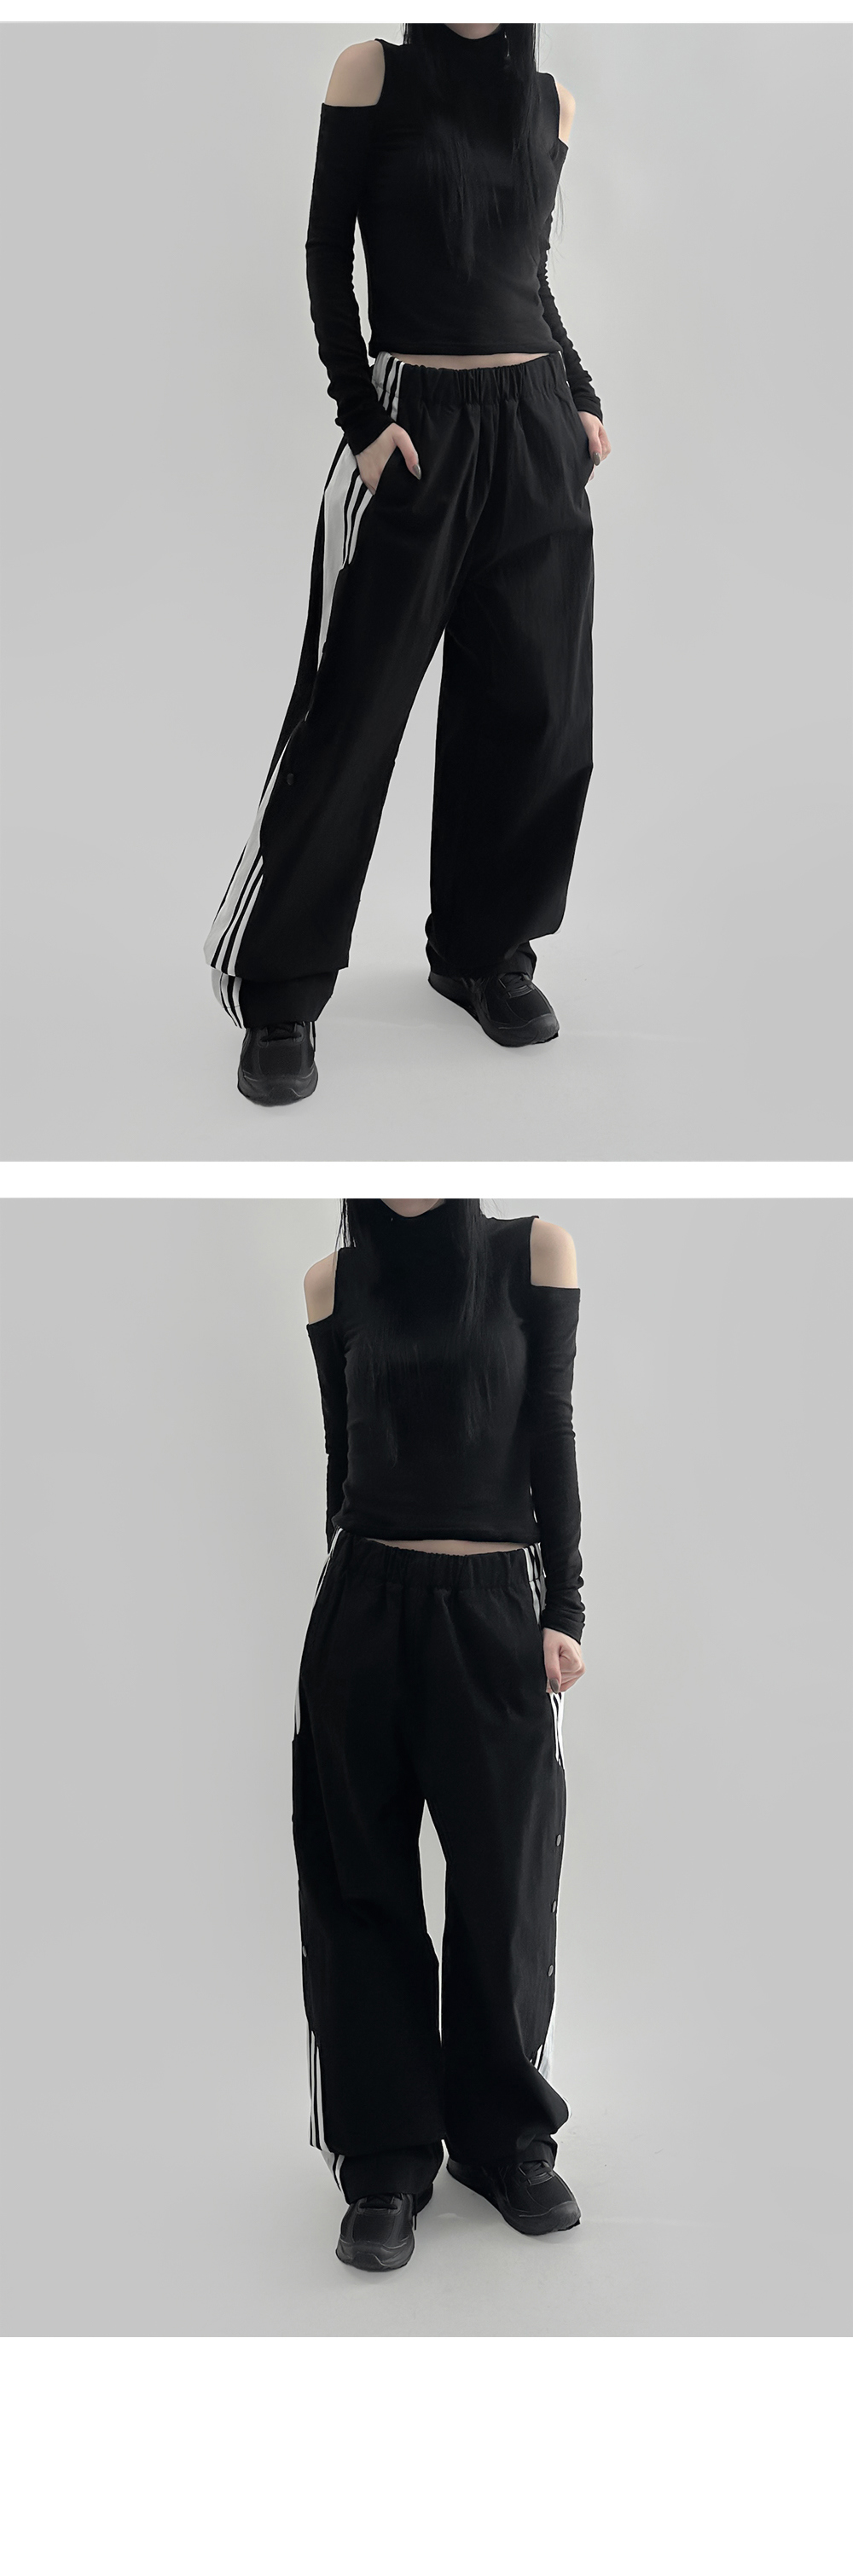 suspenders skirt/pants model image-S1L6